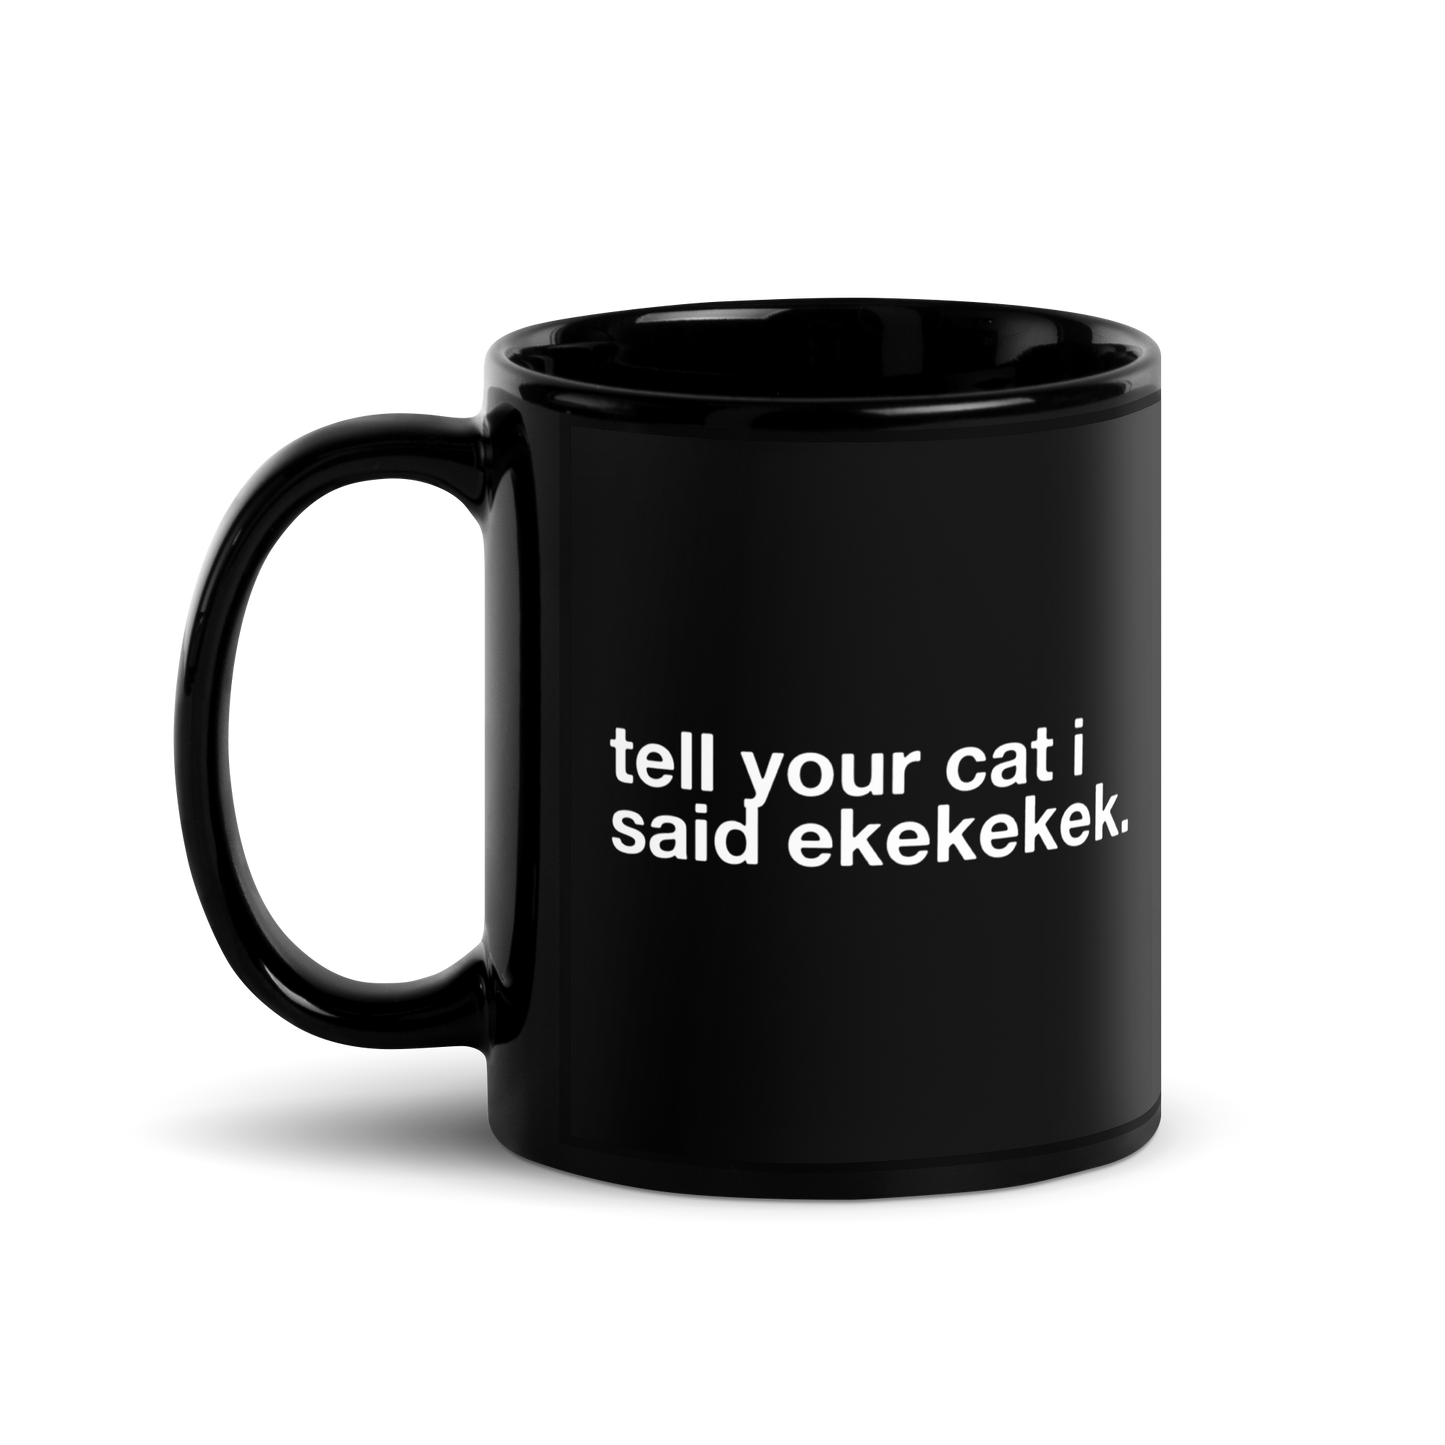 tell your cat i said ekekekek. - Mug